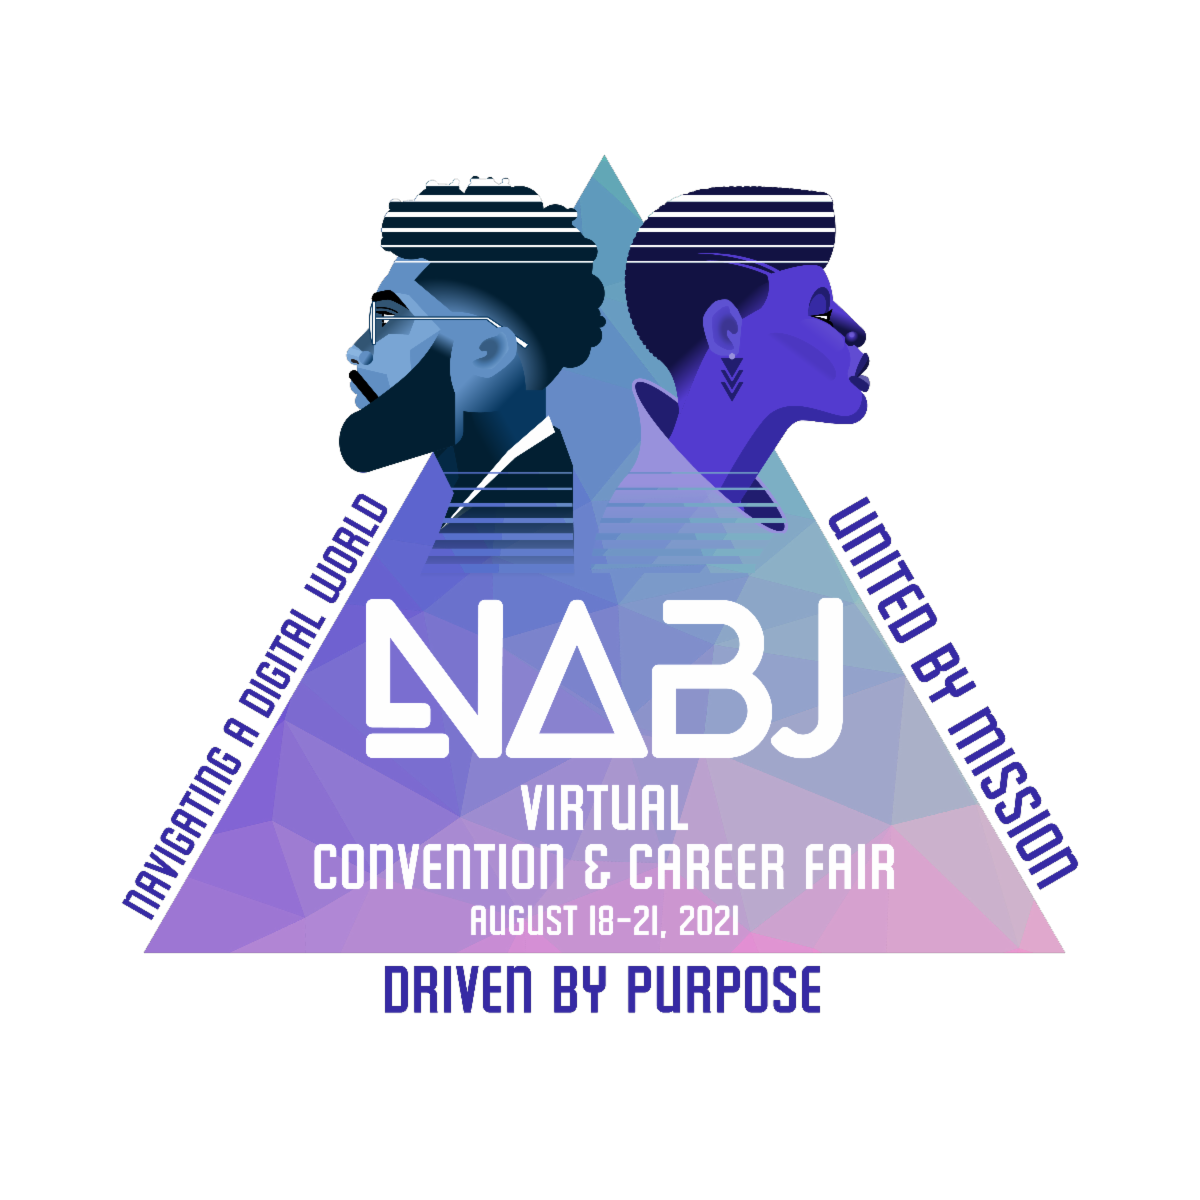 NABJ21 Logo by Sheldon Sneed